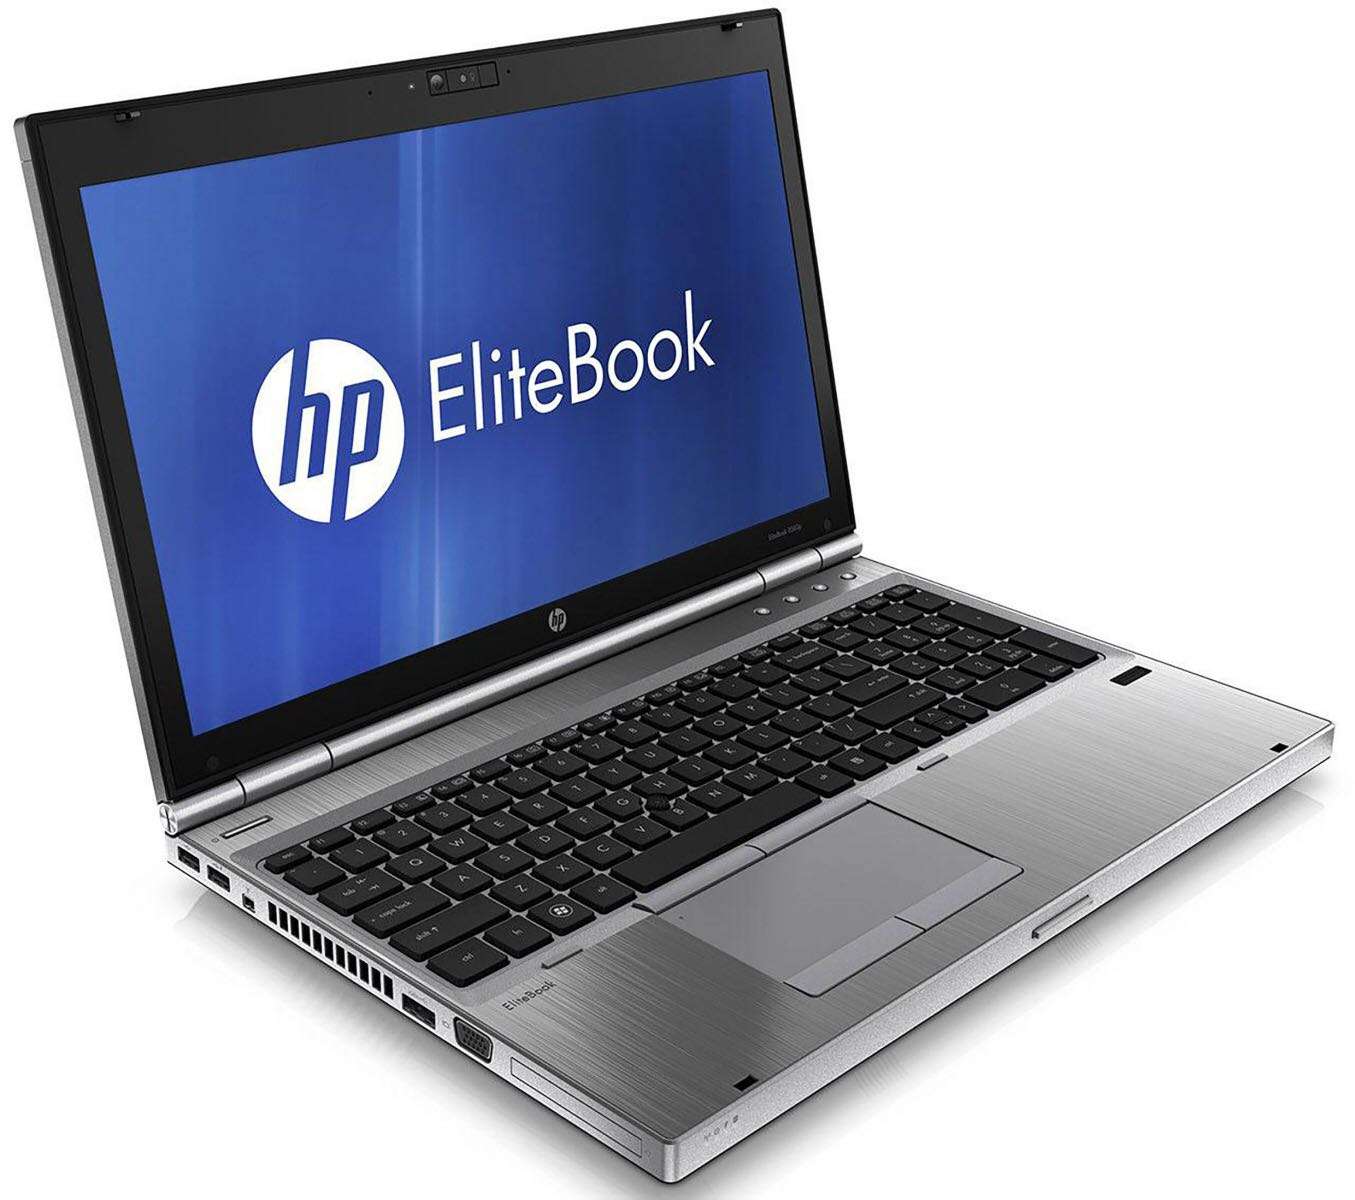 HP Elitebook 8570p (Core i5 3320M, 4GB, 250GB, AMD Radeon HD 7570M, 15.6 inch)